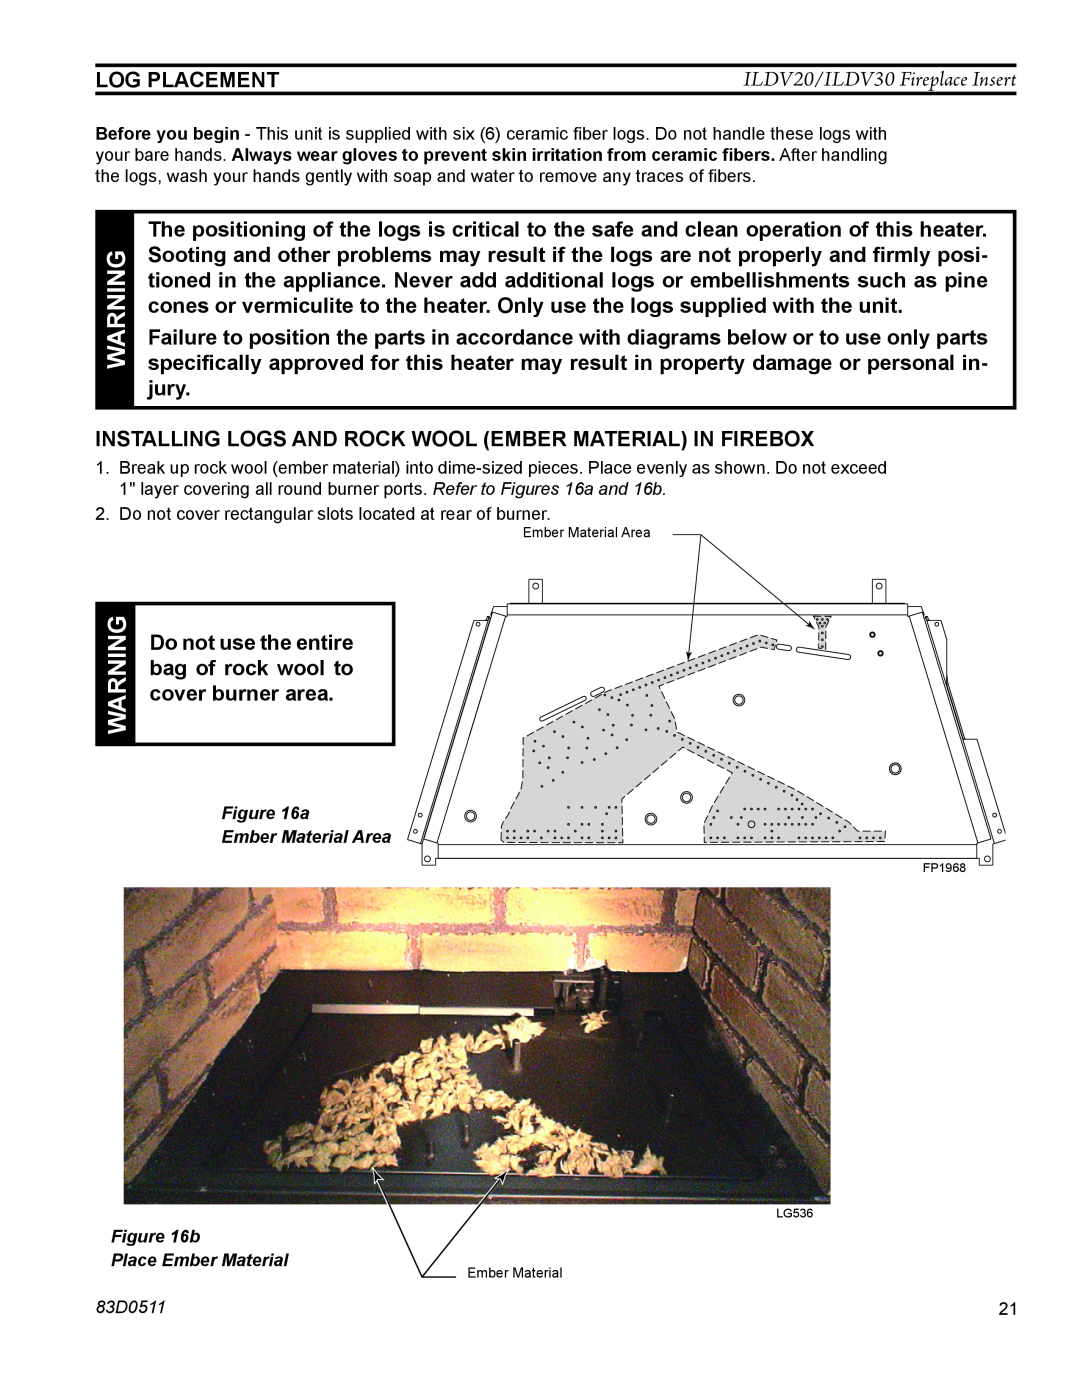 Monessen Hearth ILDV20NV, ILDV30NV, ILDV20PV manual log placement, a Ember Material Area, b Place Ember Material 